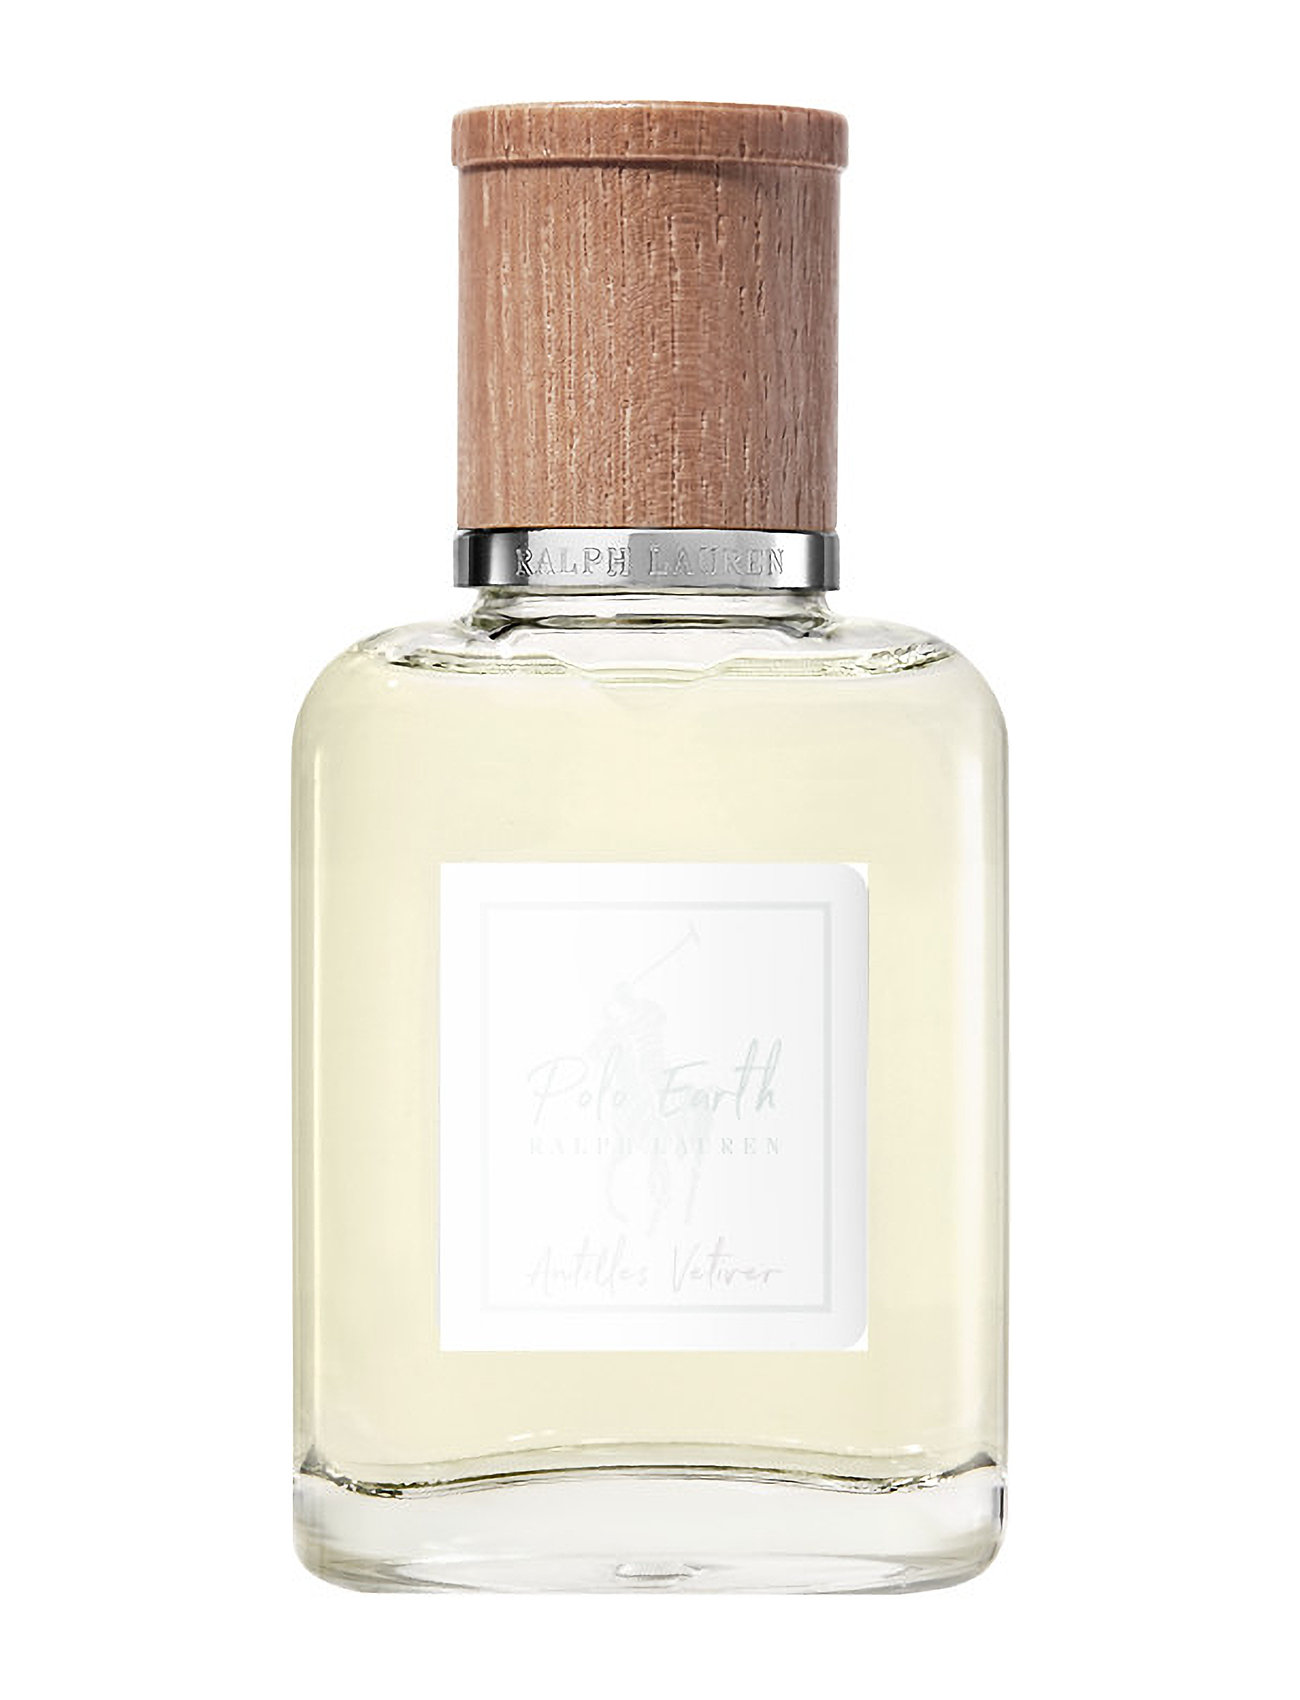 Polo Earth Antilles 40Ml Beauty Women Fragrance Perfume Mists Nude Ralph Lauren - Fragrance